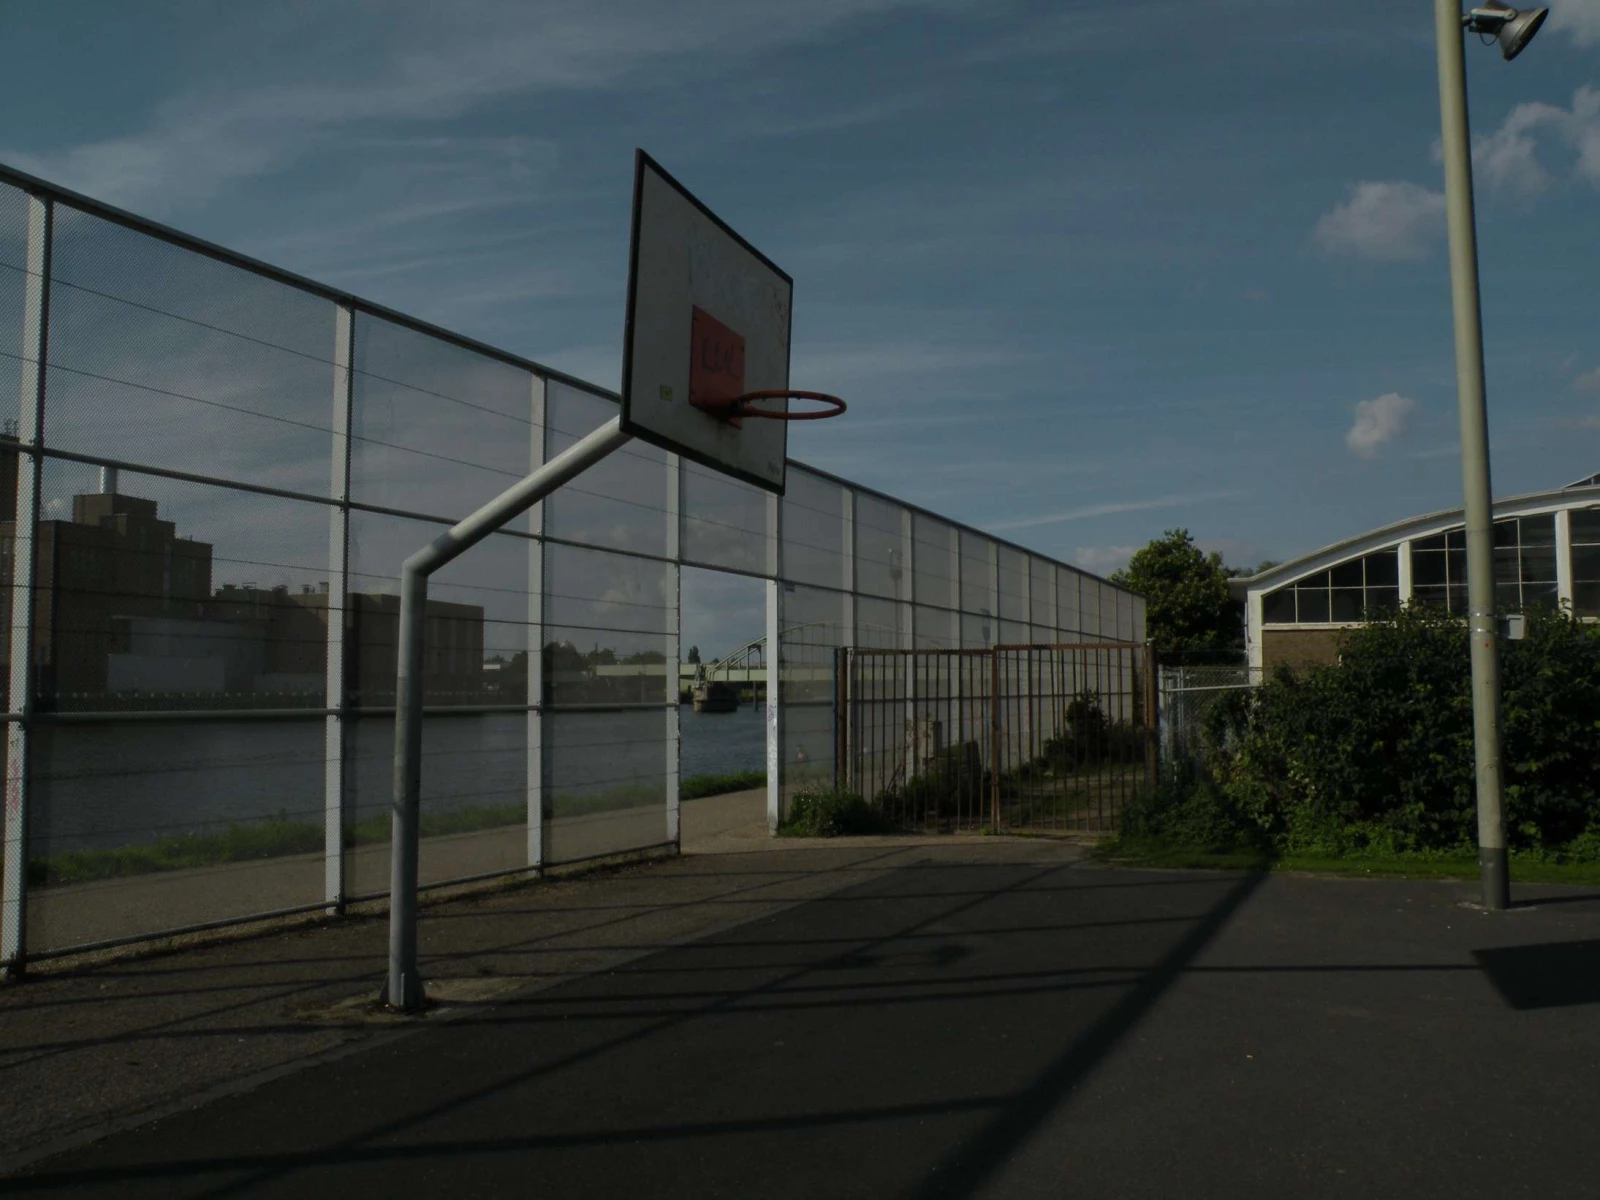 Maastricht Basketball Court: De Griend – Courts of the World